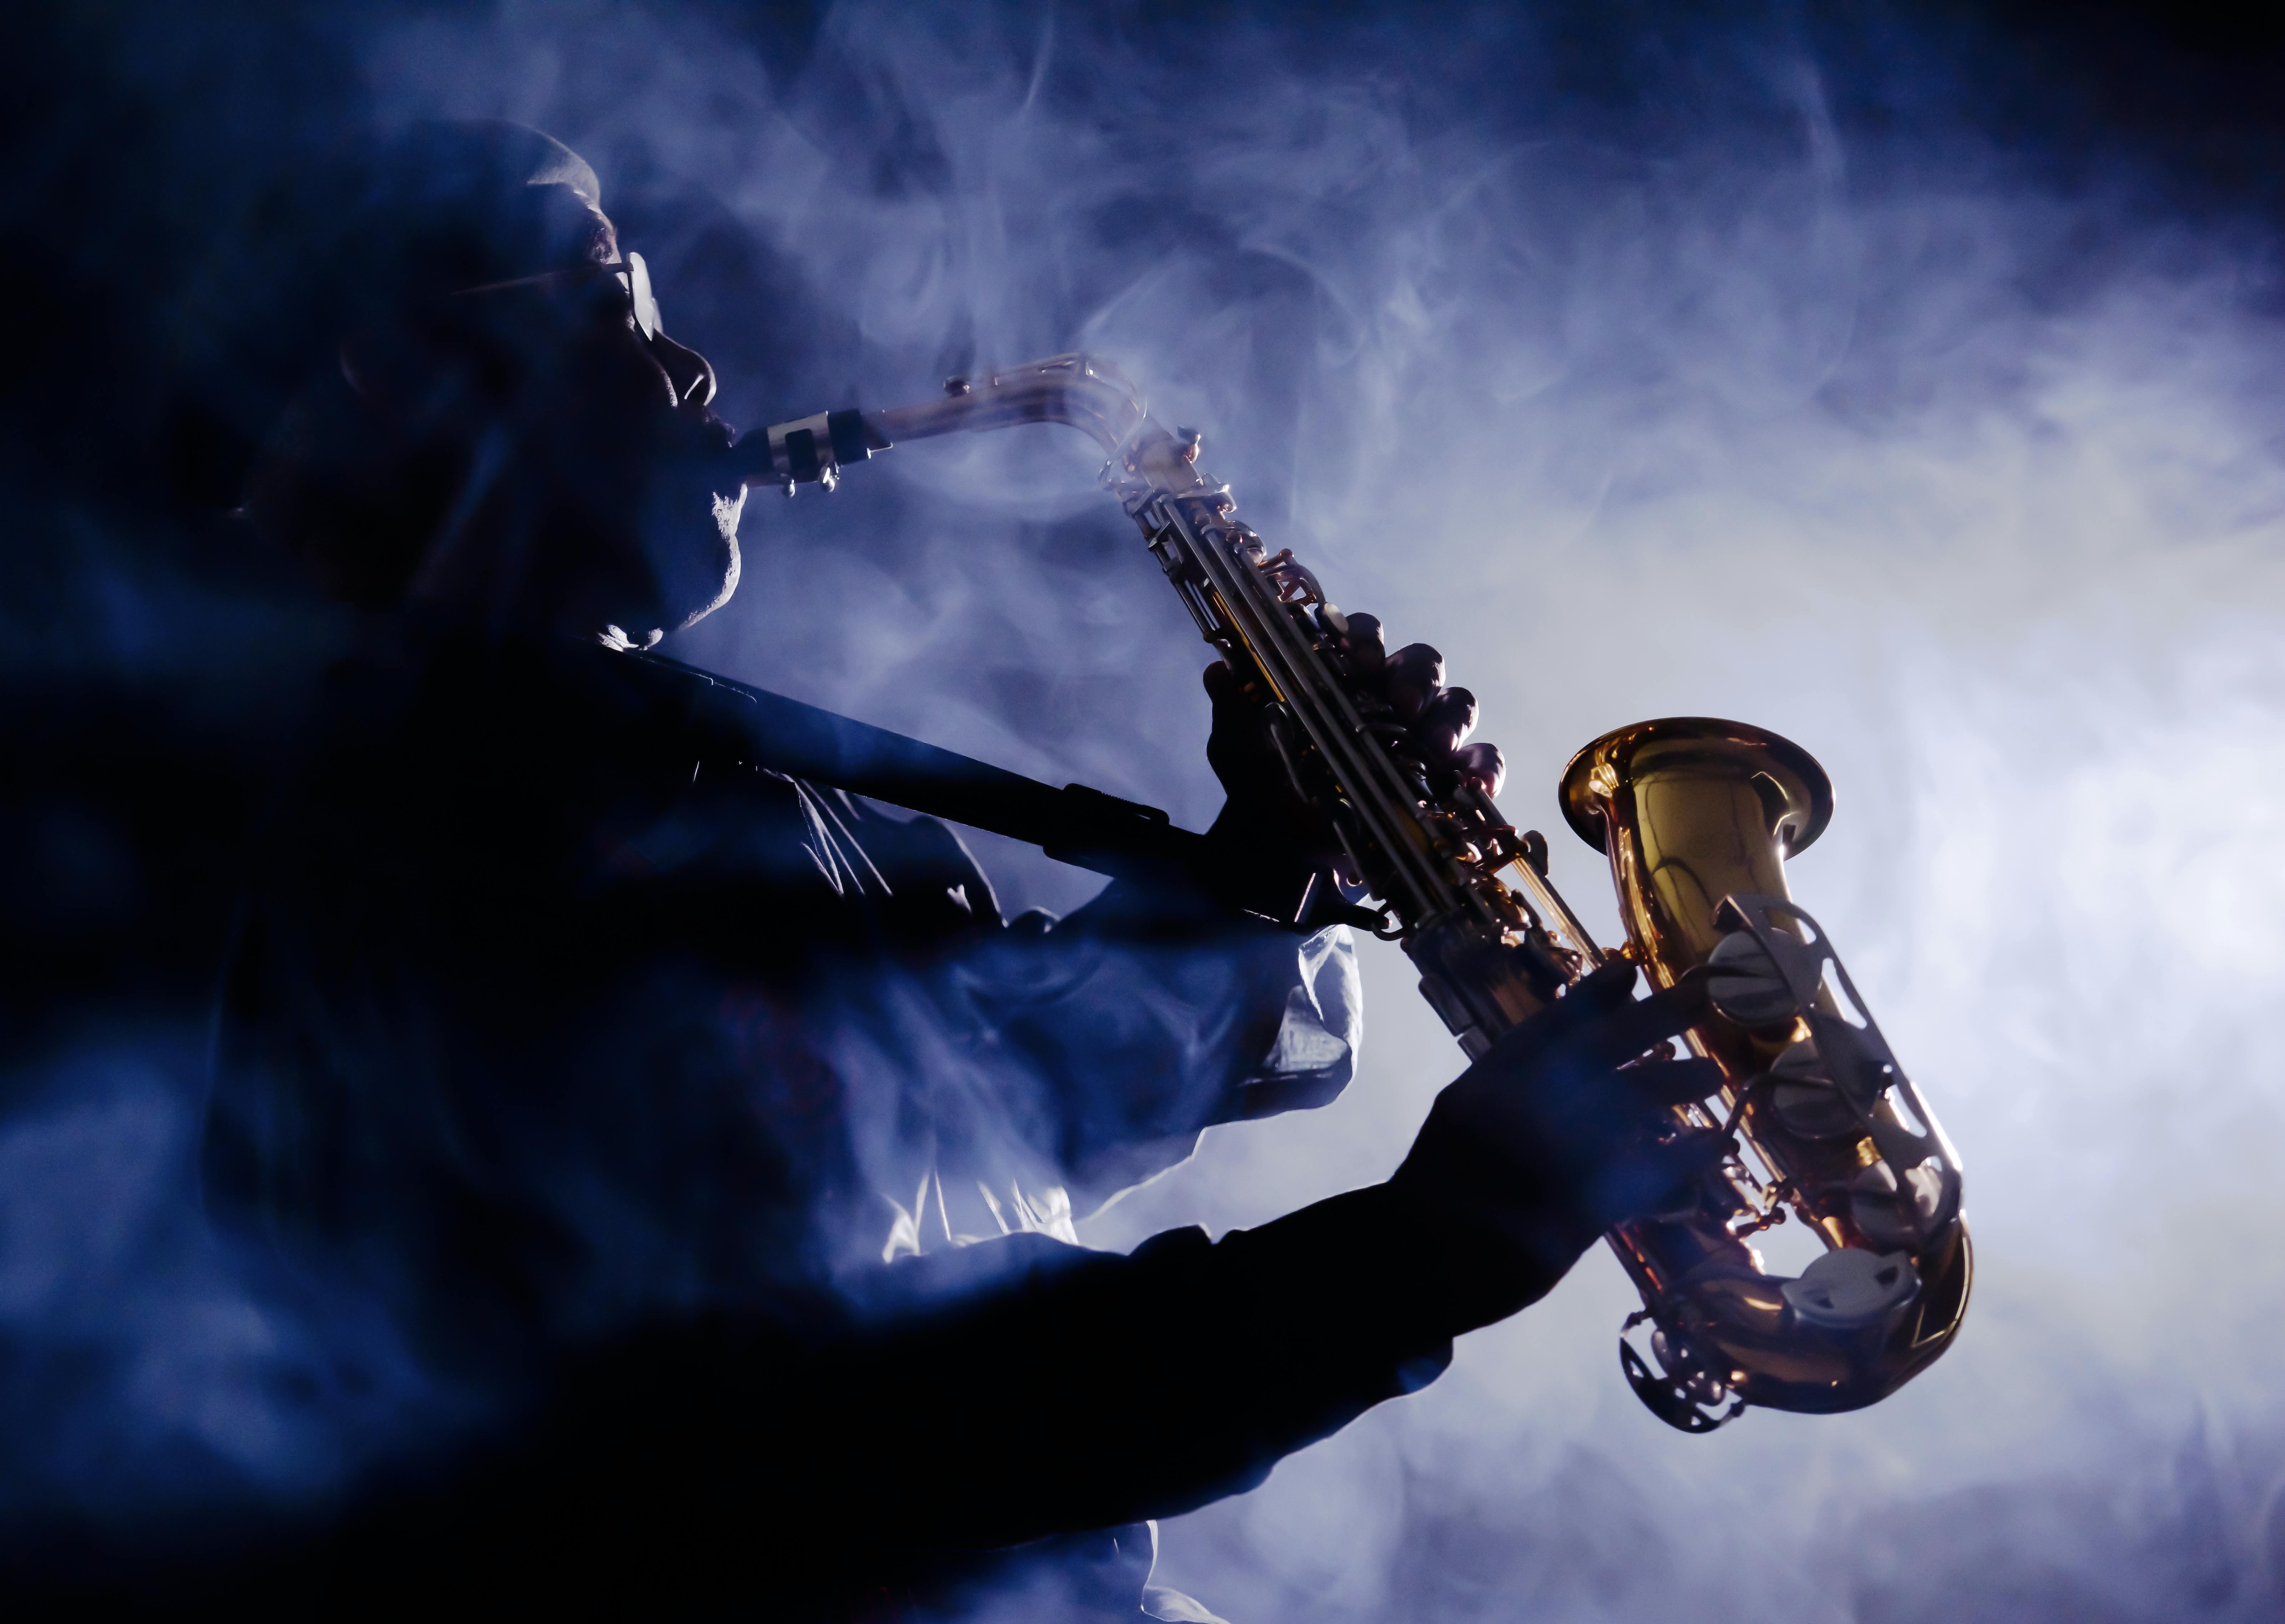 Jazz saxophonist